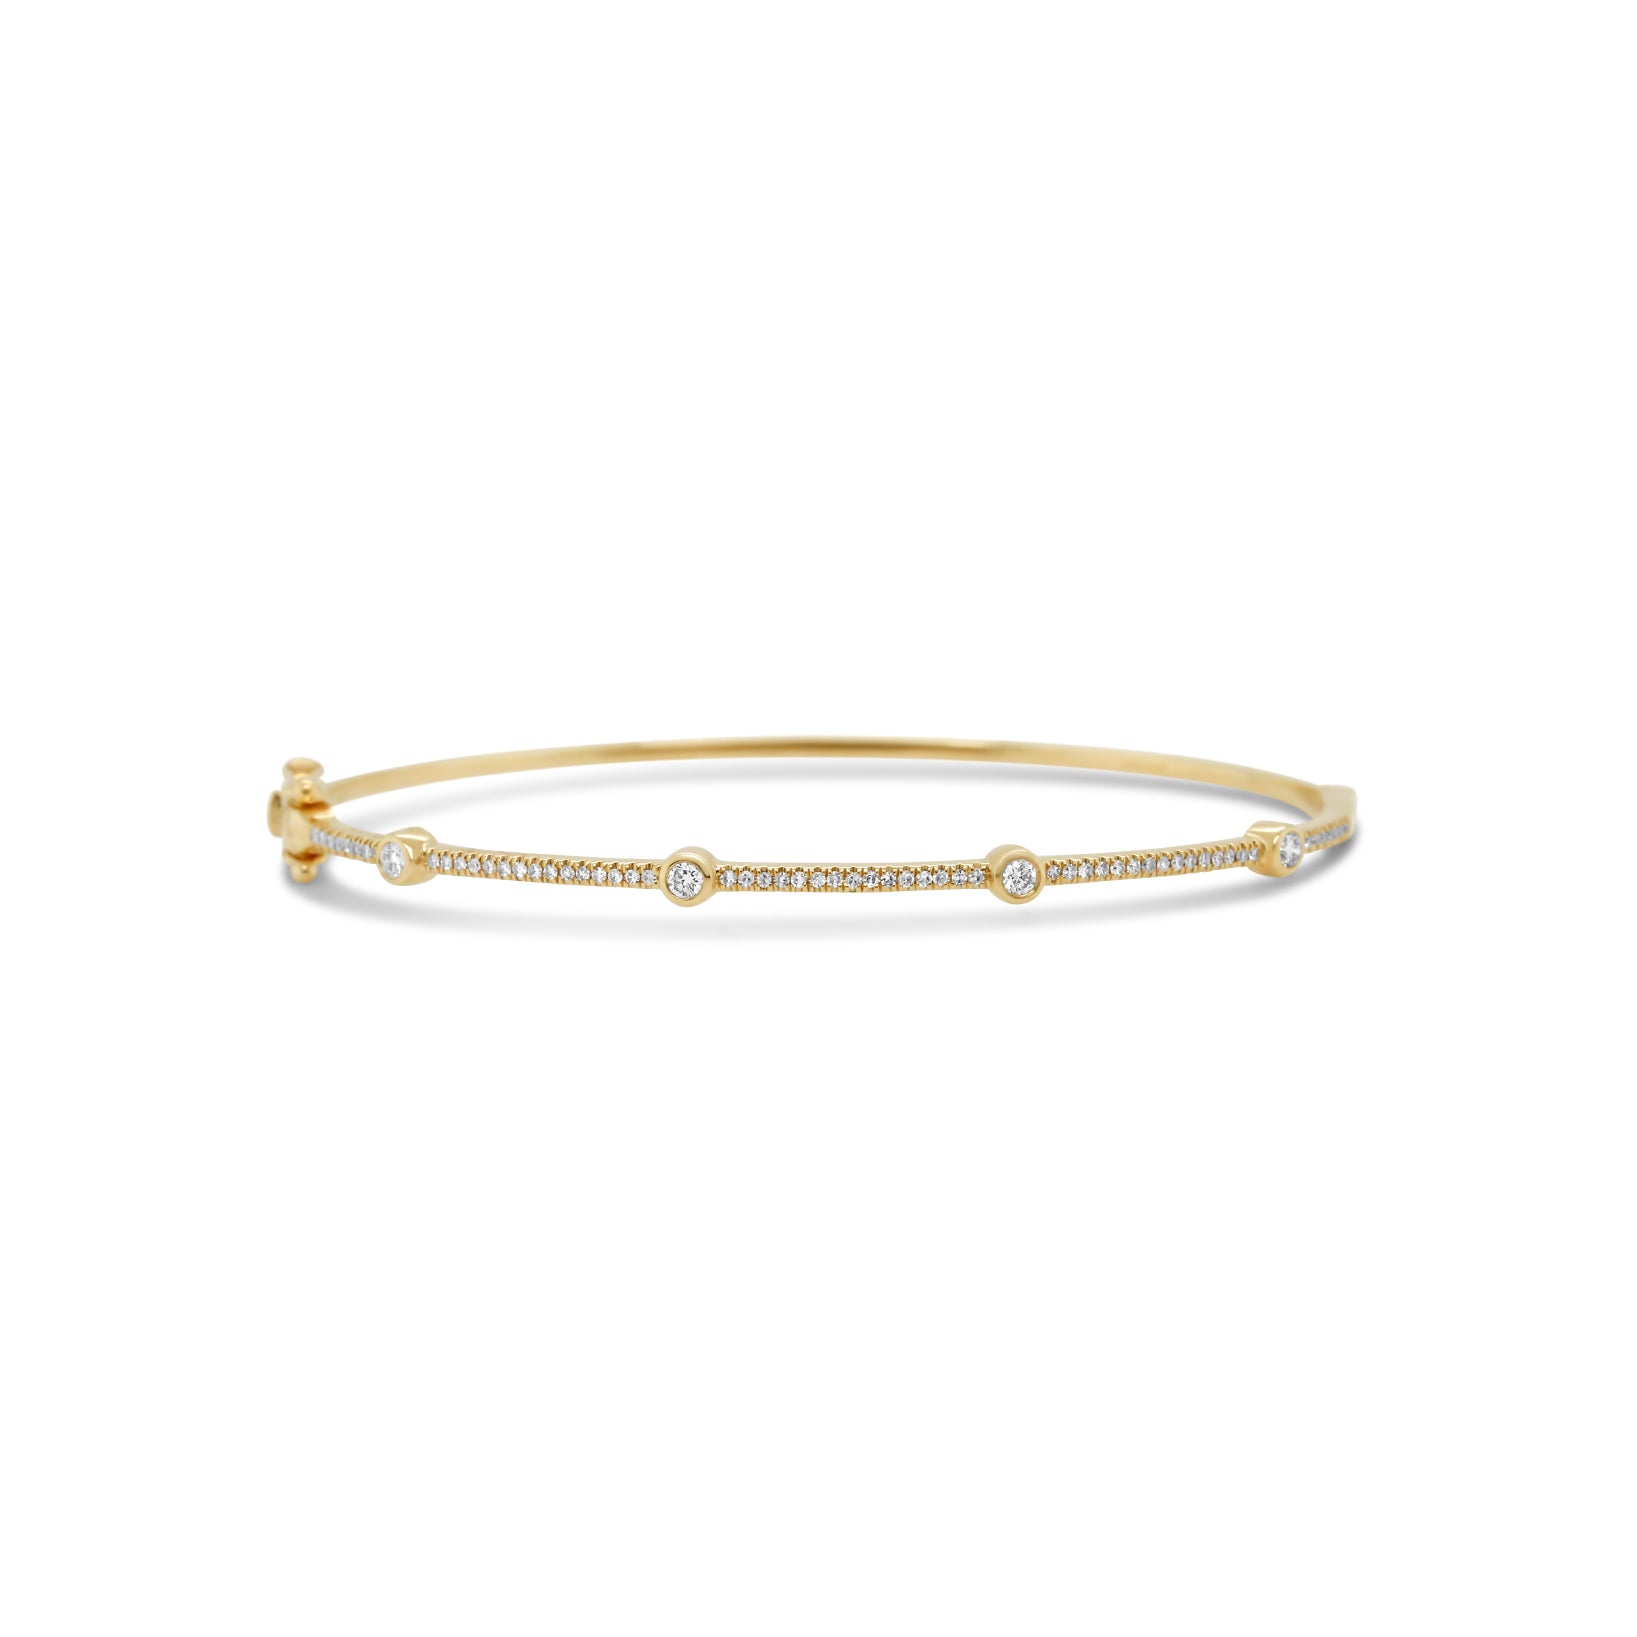 14k yellow gold diamond bezel and pave bangle bracelet with clasp